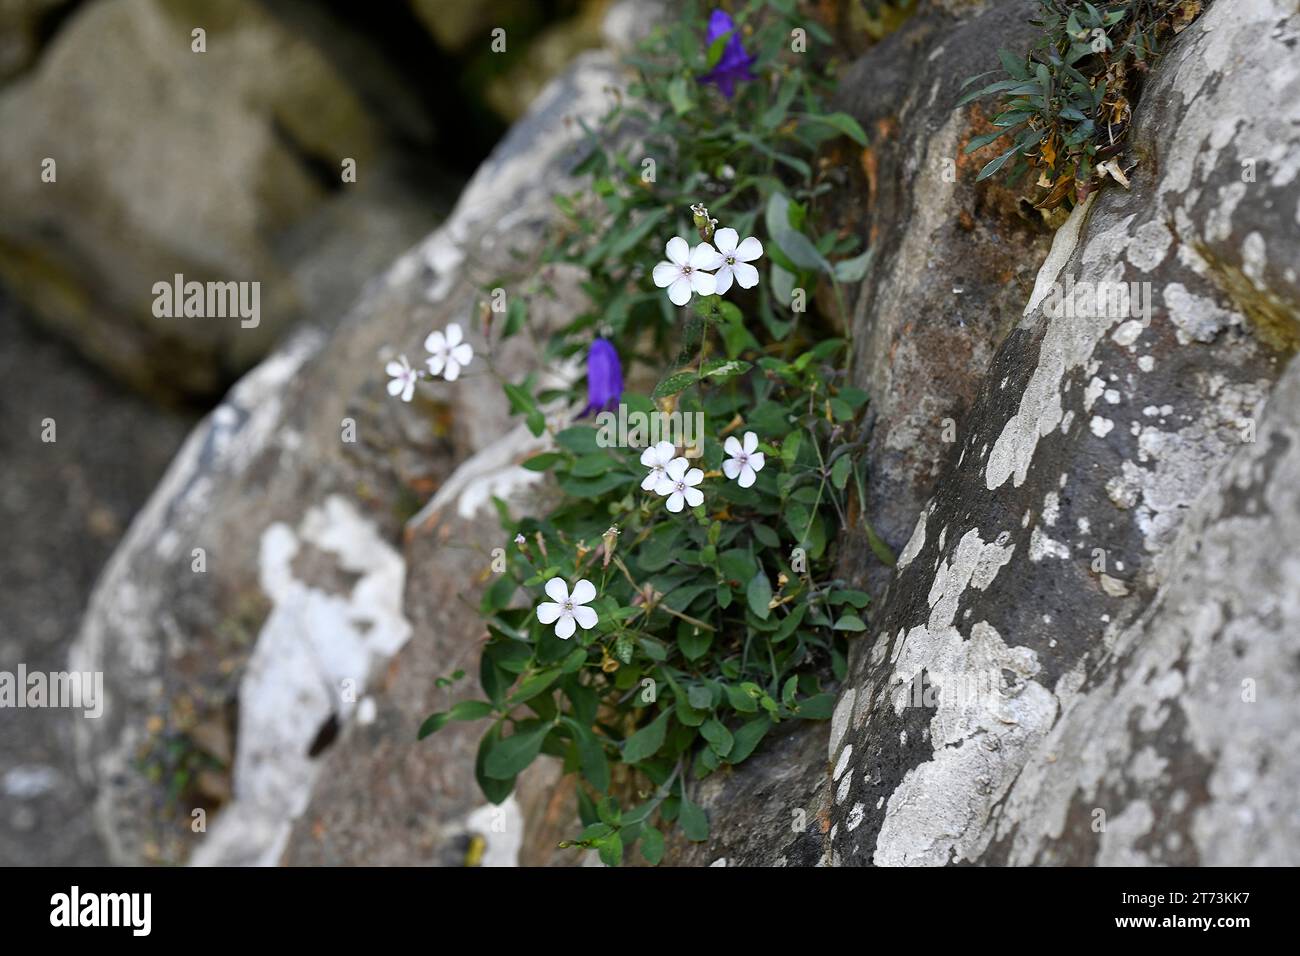 Petrocoptis pyrenaica glaucifolia is a perennial plant endemic to Cantabrian mountains. This photo was taken in Deboyu cave, Asturias, Spain. Stock Photo